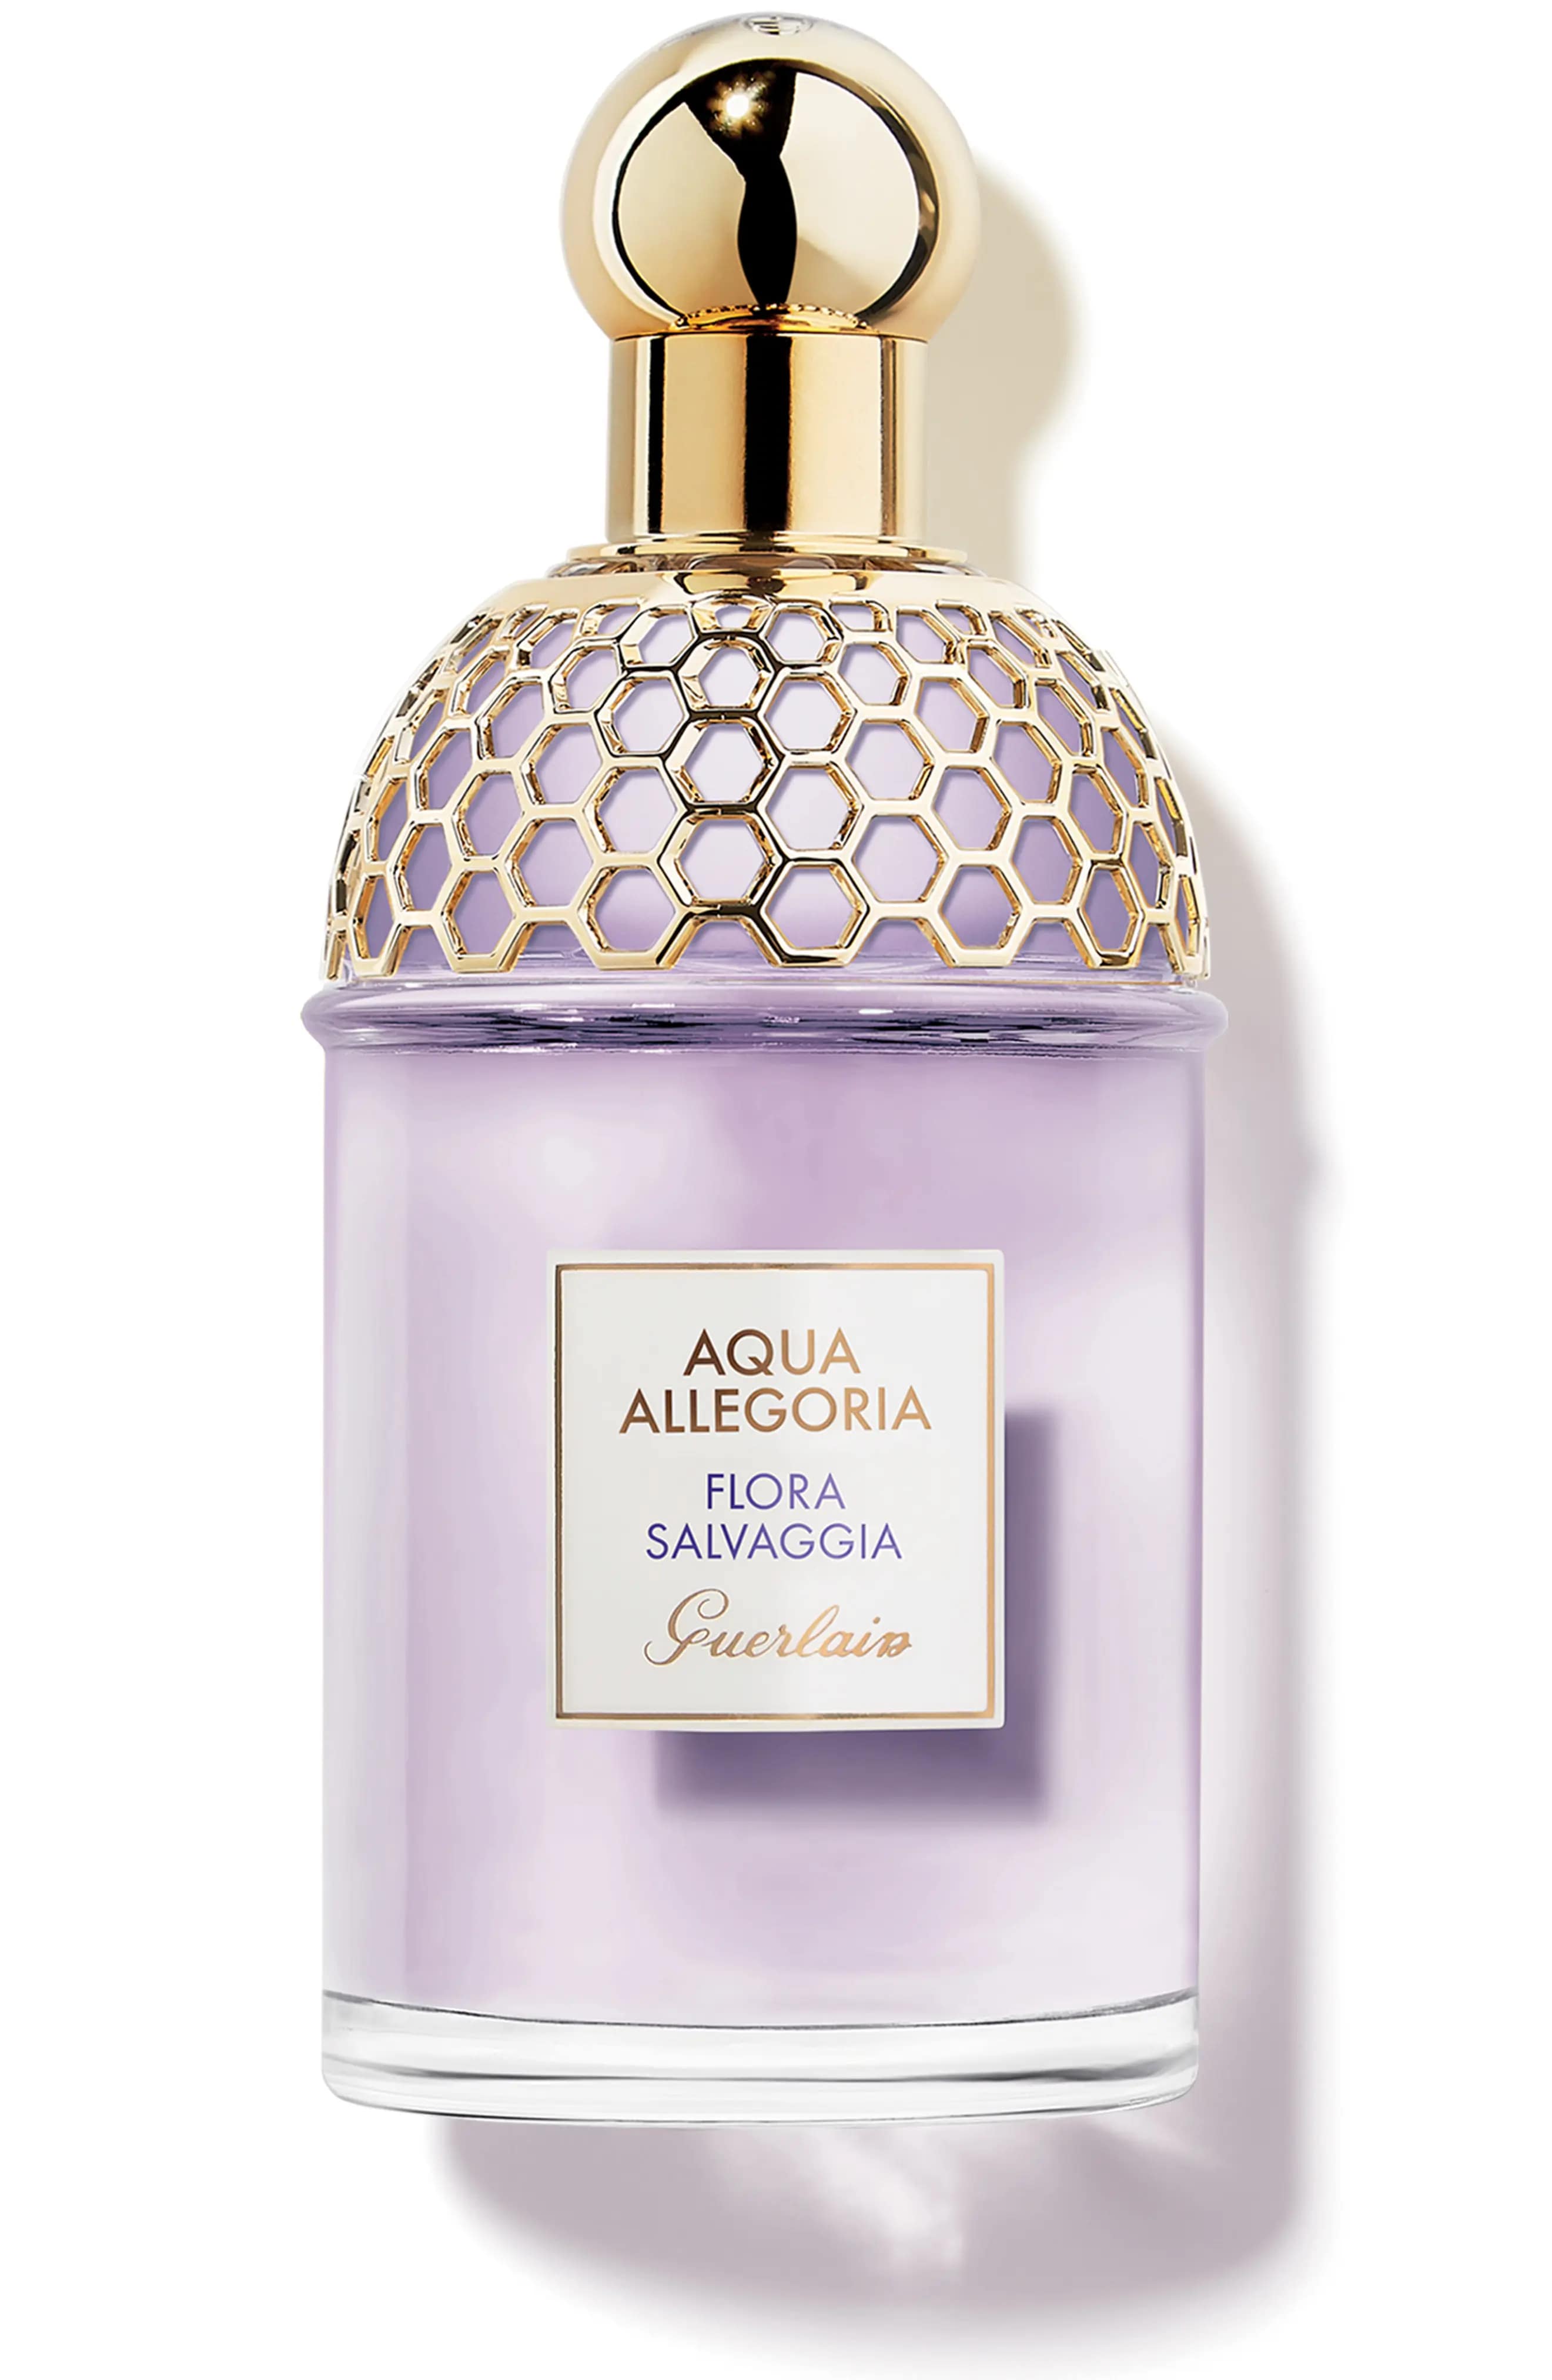 Aqua Allegoria Flora Salvaggia EDT Spray Perfume for Women by Guerlain